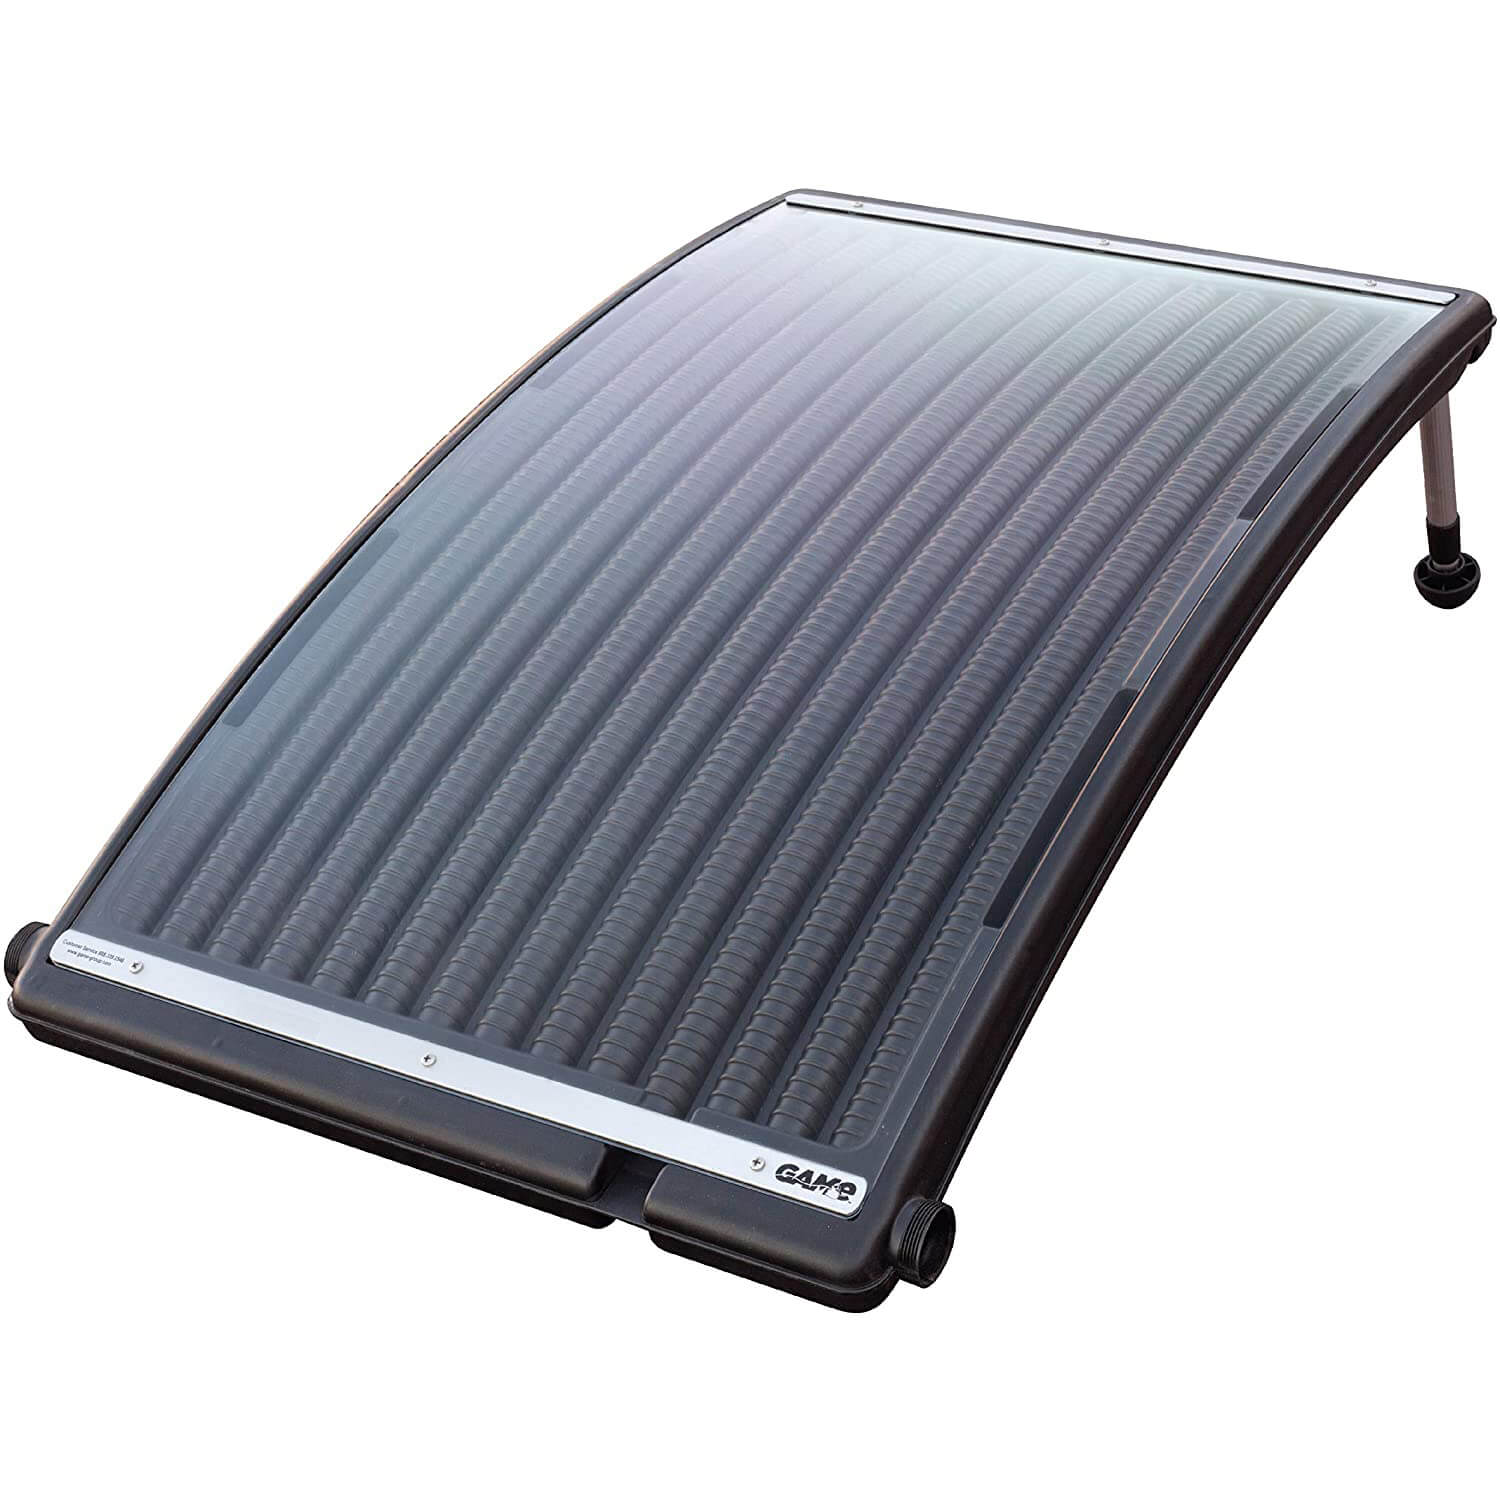 GAME 4721 SolarPRO Curve Solar Pool Heater